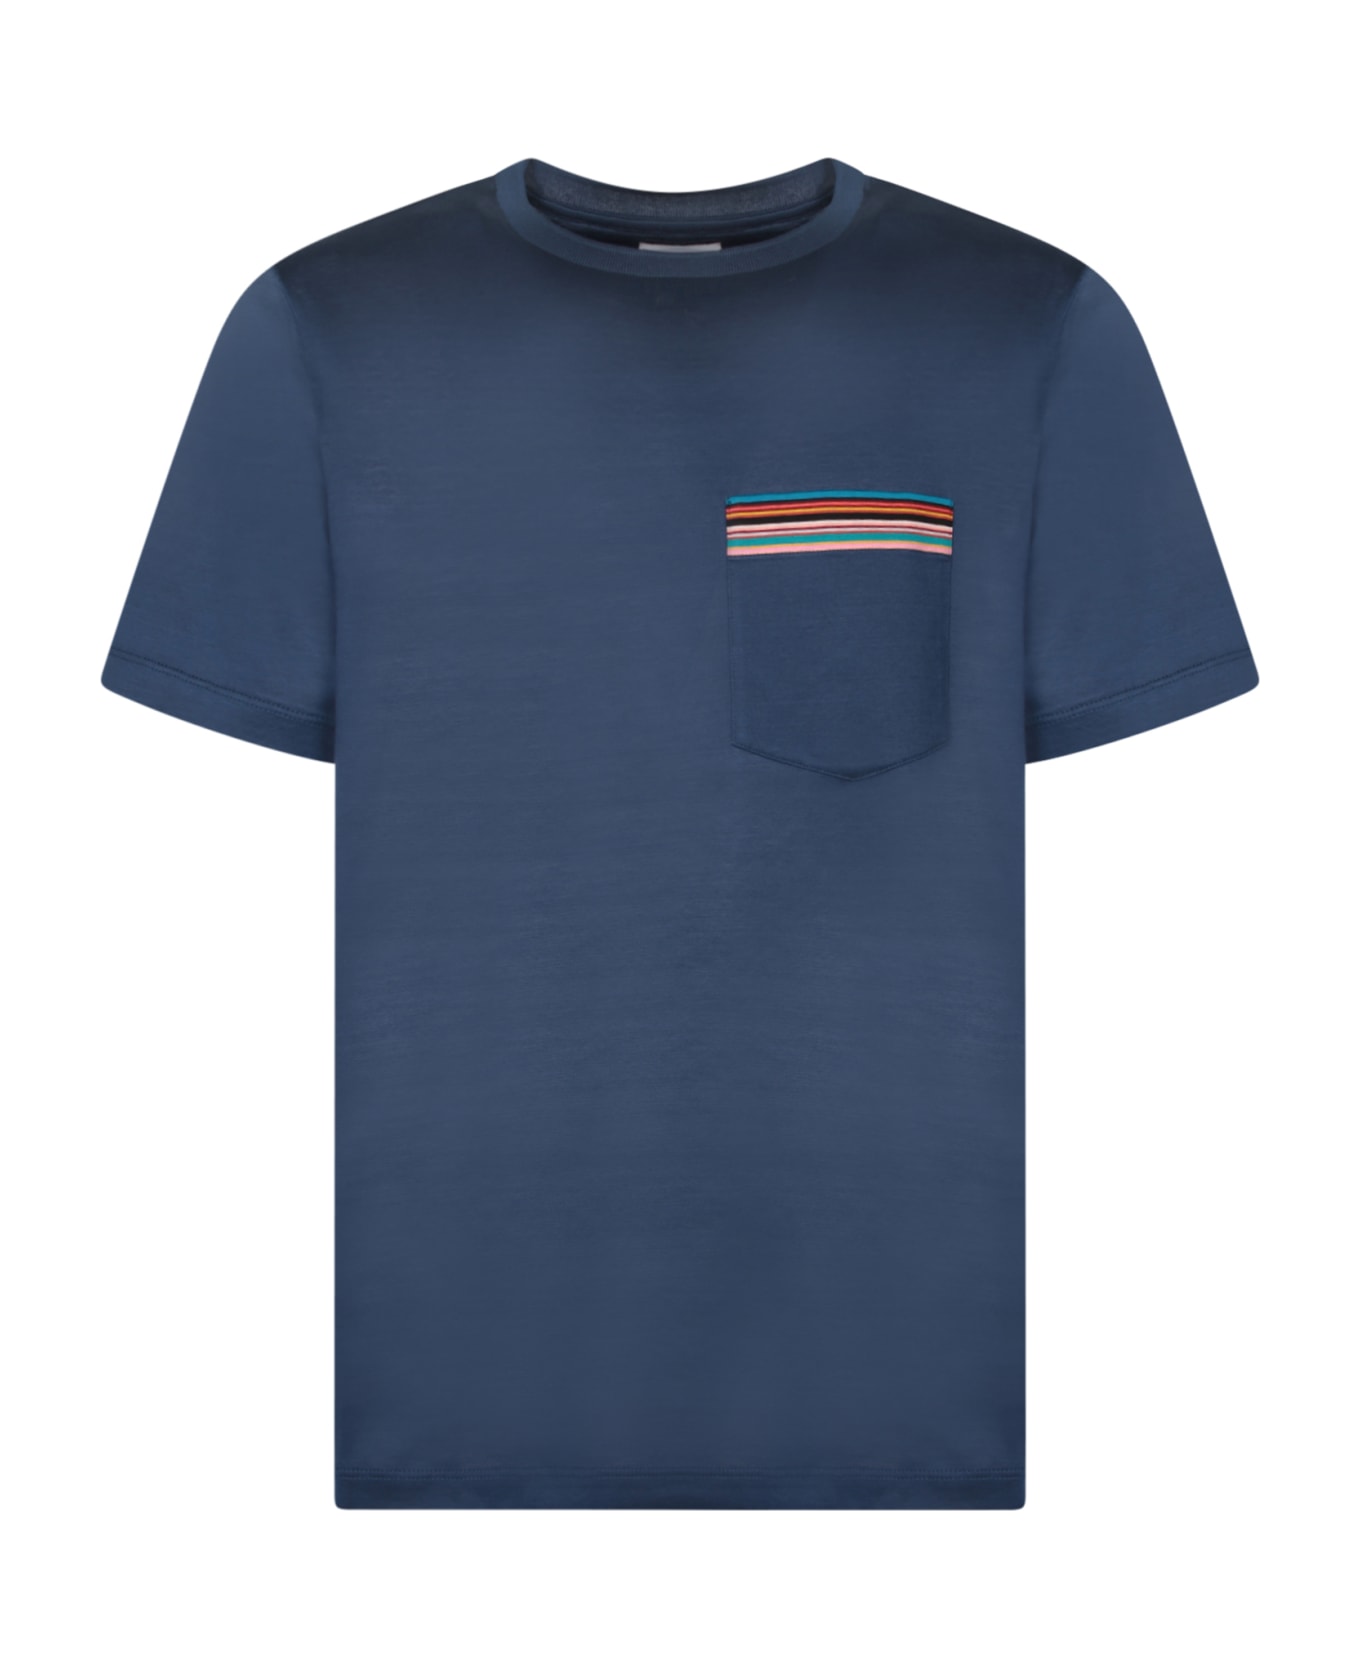 Paul Smith Striped Pocket T-shirt - Blue